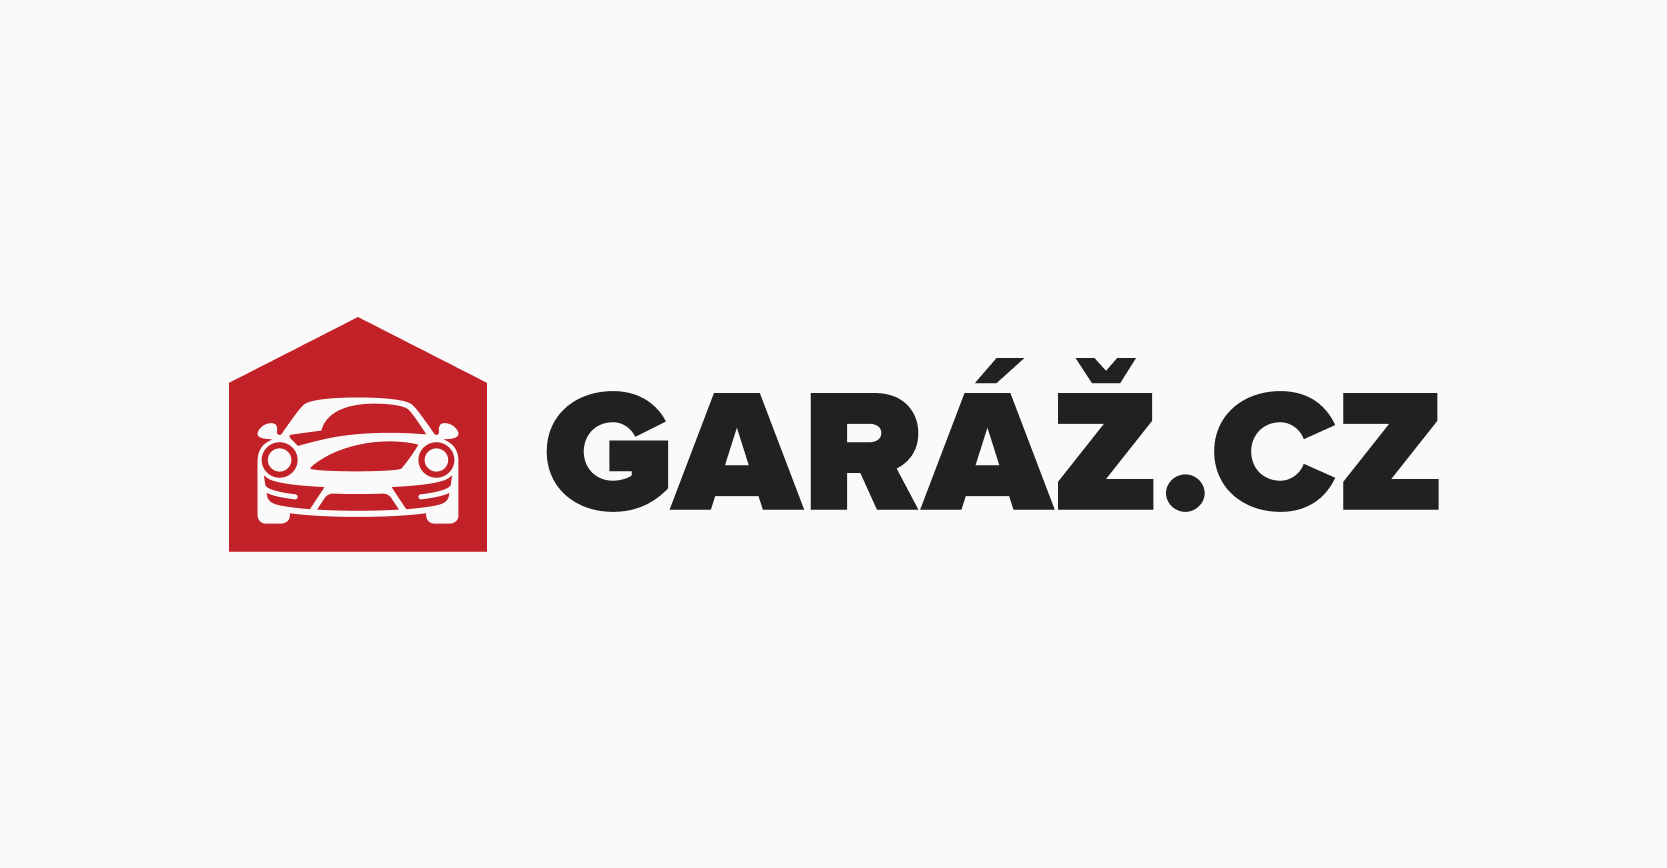 Garáž.cz